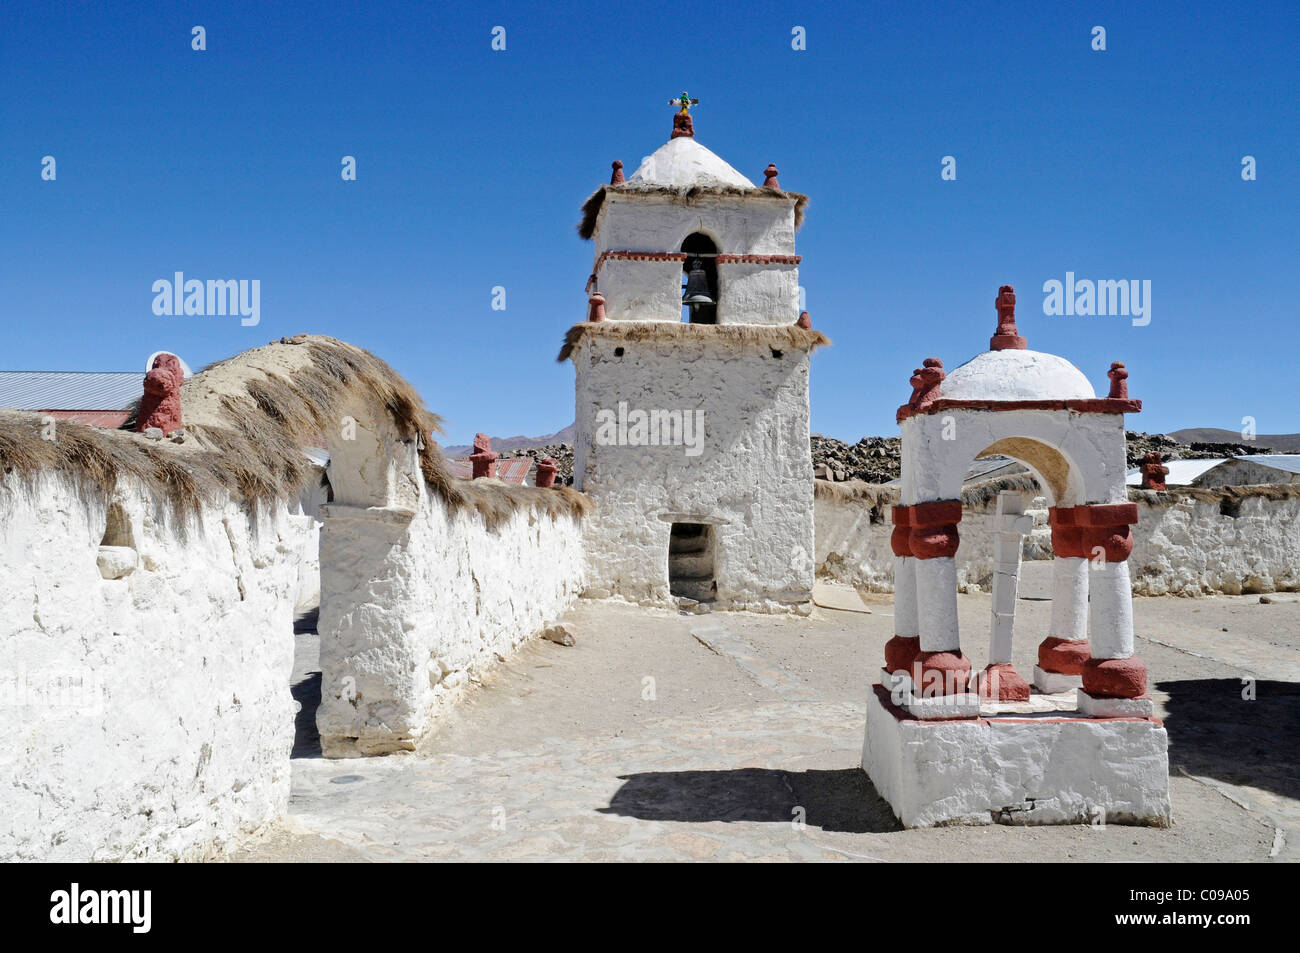 Kirche gebaut mit Adobe Bau Methoden, Parinacota, Bergdorf, Lauca Nationalpark, Altiplano, Norte Grande Stockfoto